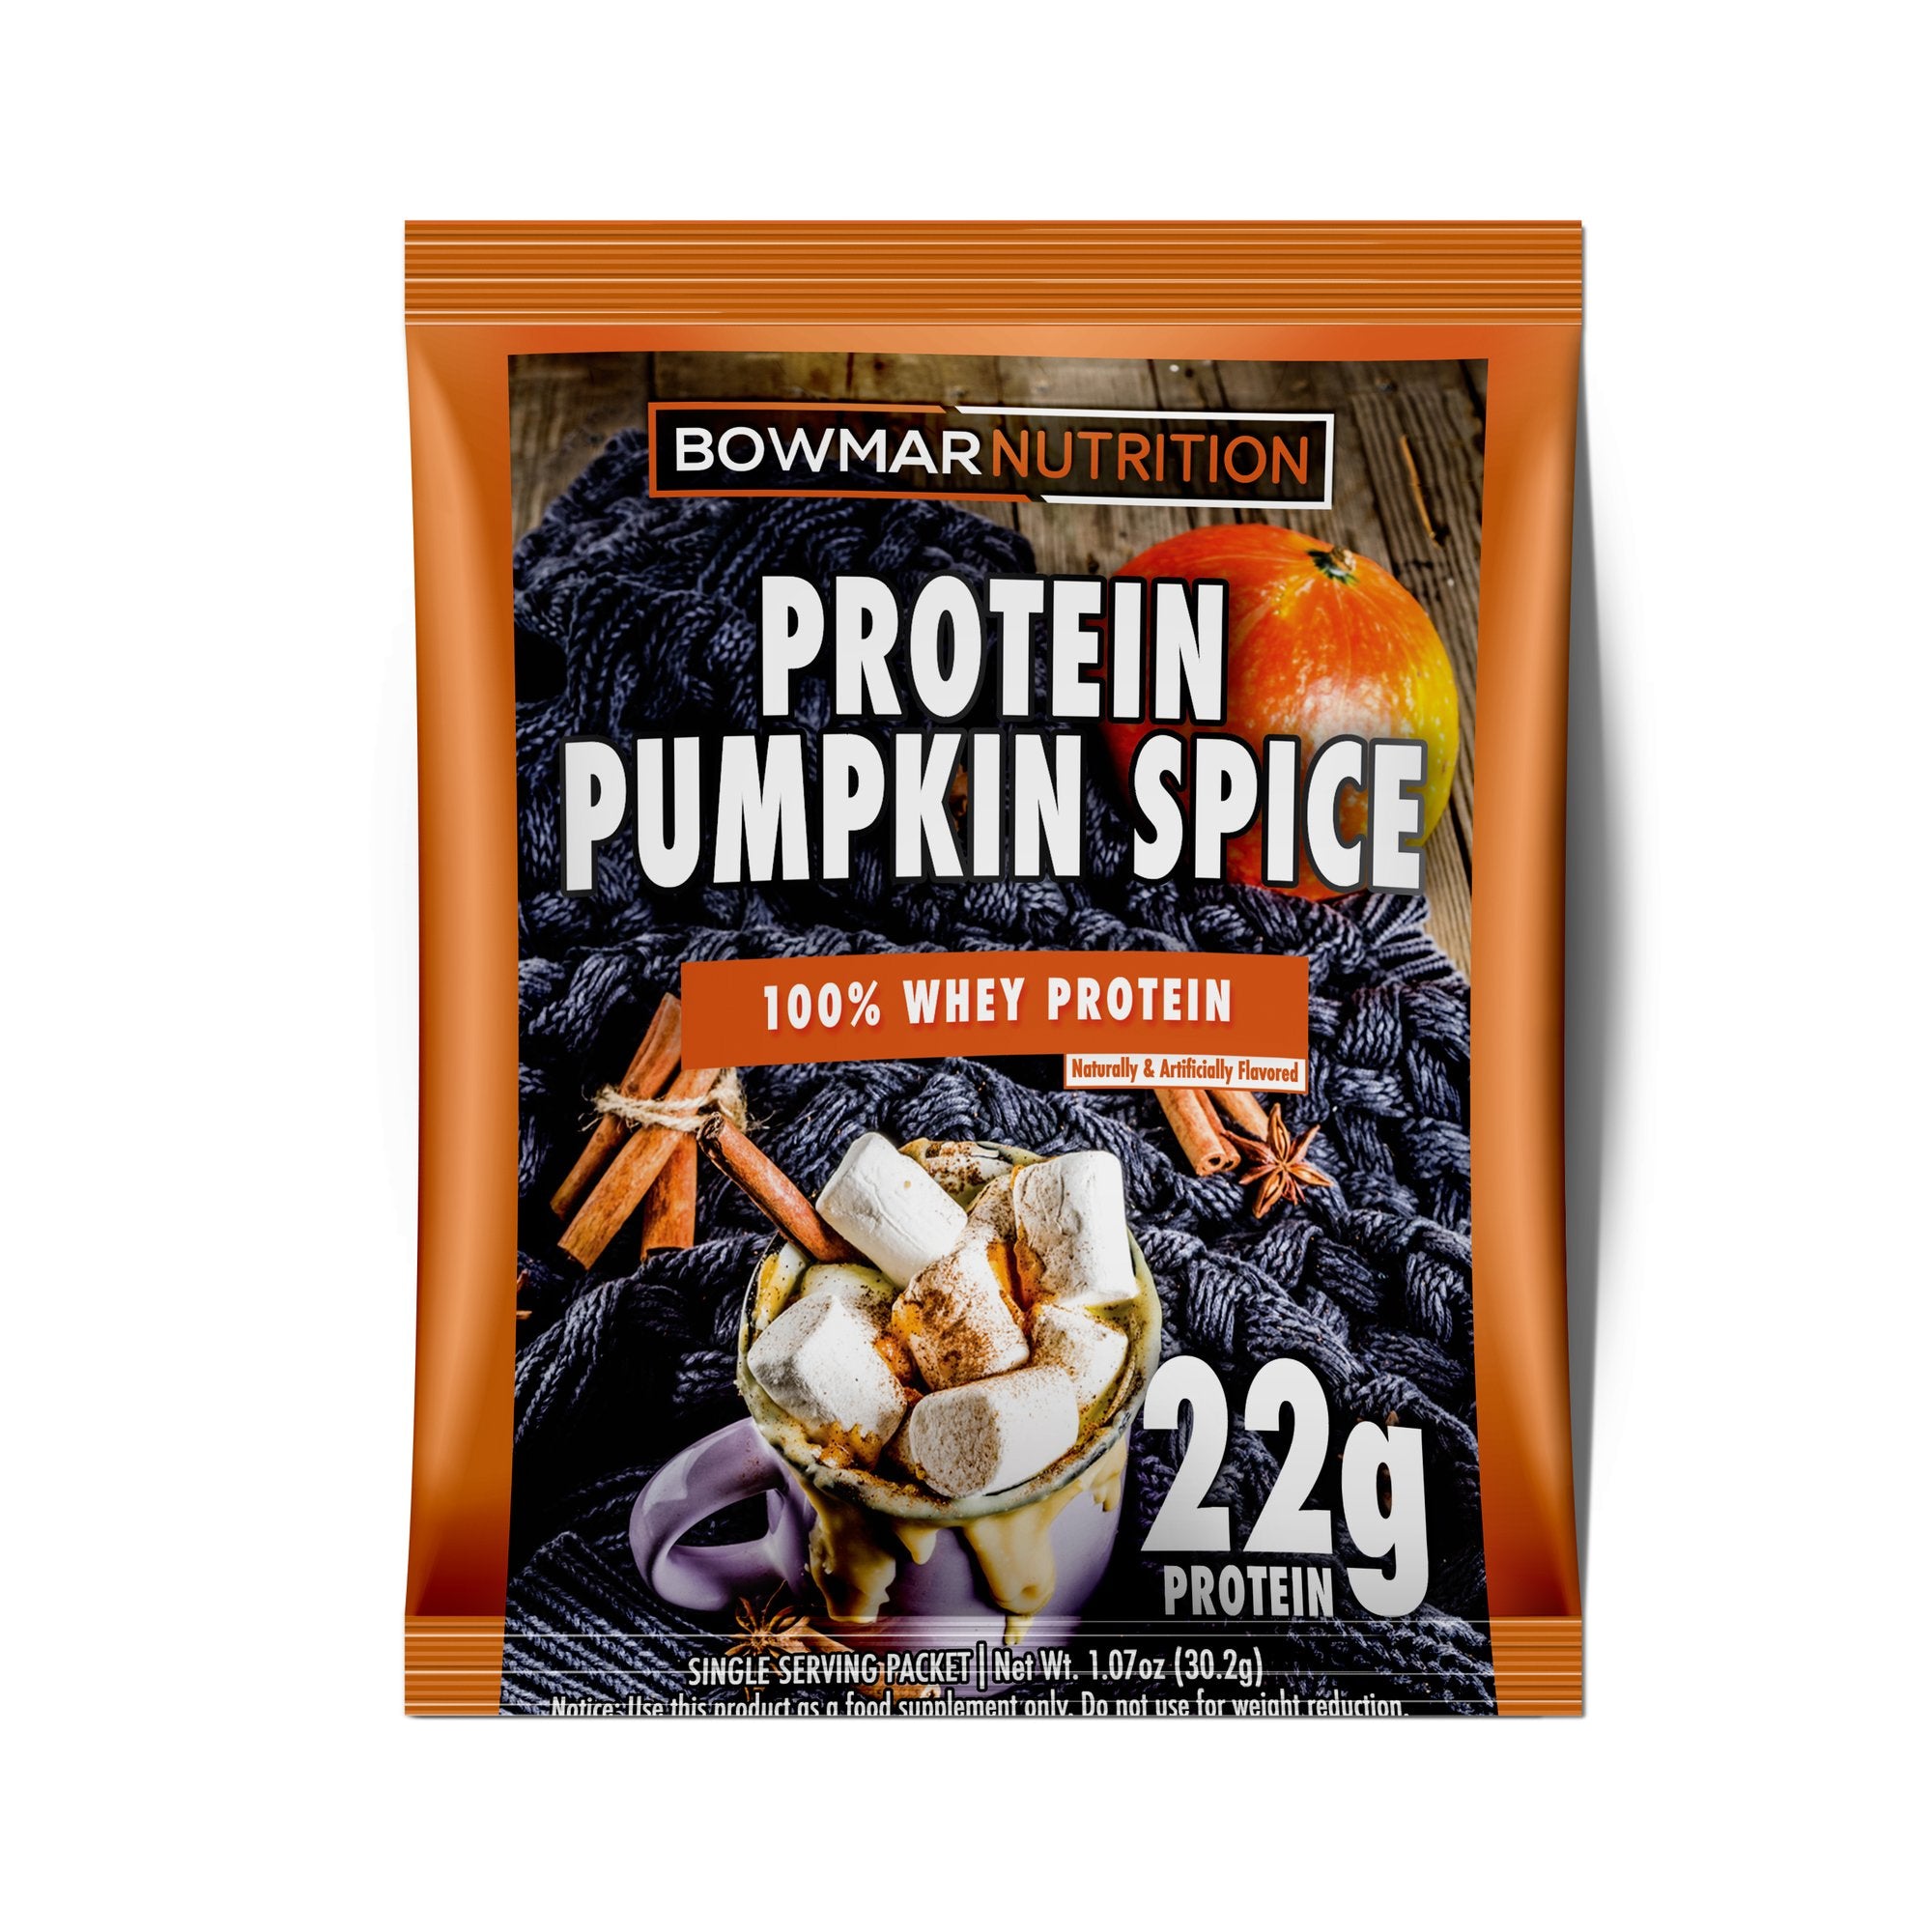 Bowmar Whey Protein Powder Sample (1 serving) Protein Snacks Pumpkin Spice BEST BY 11/2022 bowmar